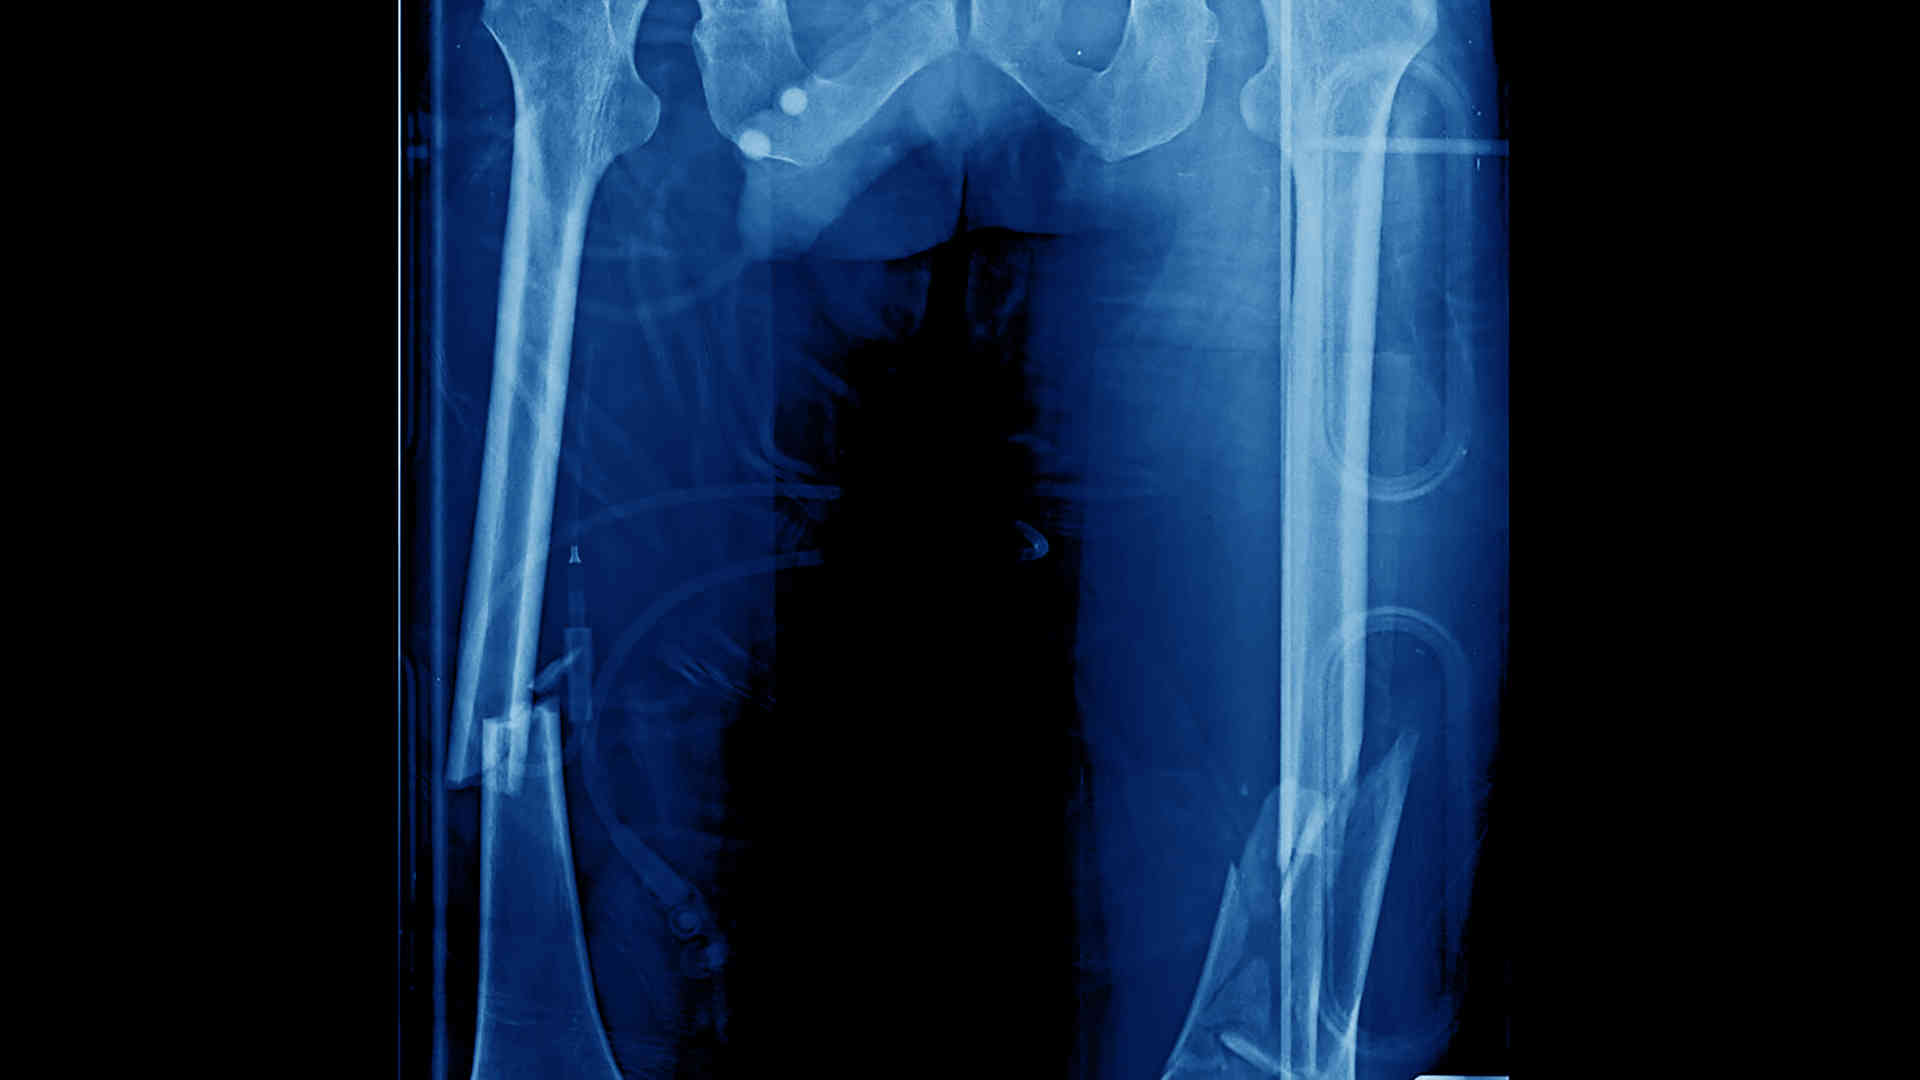 Bilateral femoral fractures